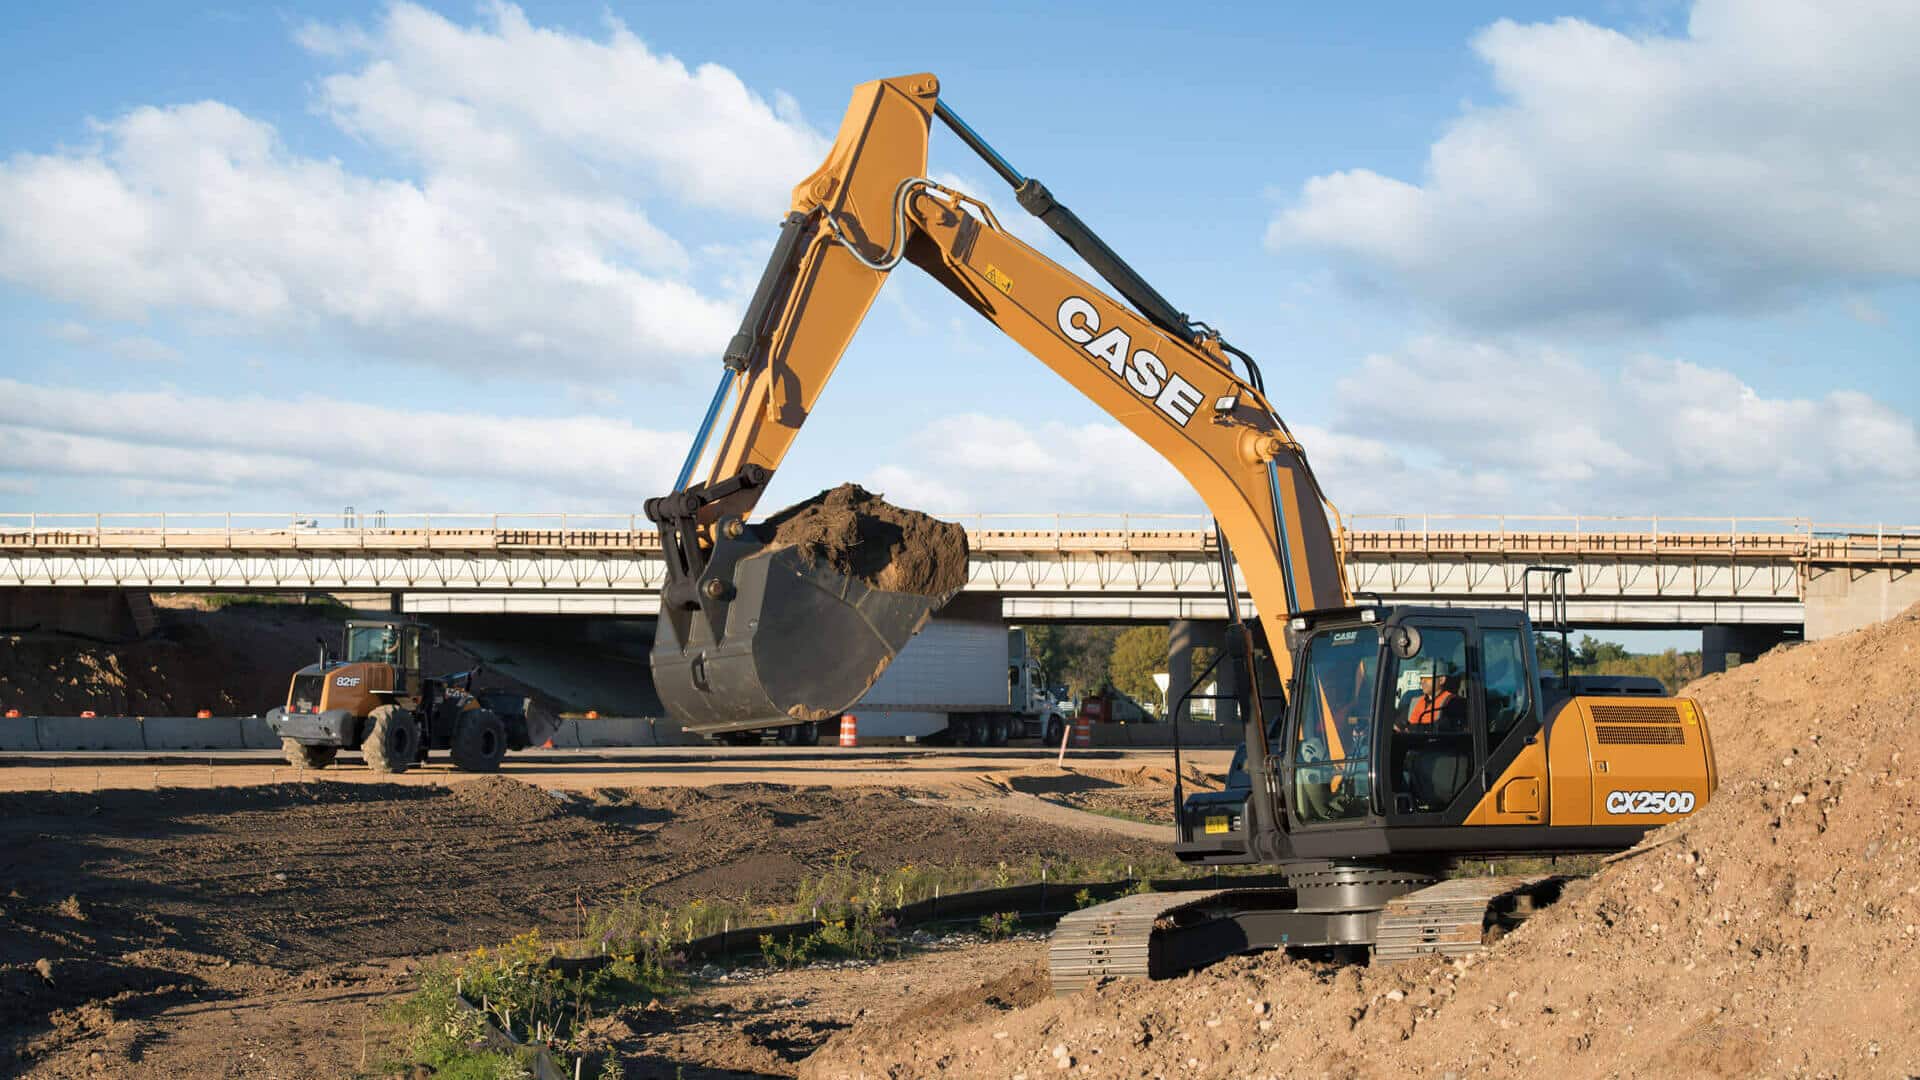 Full Size Excavator Image. CASE Construction Equipment